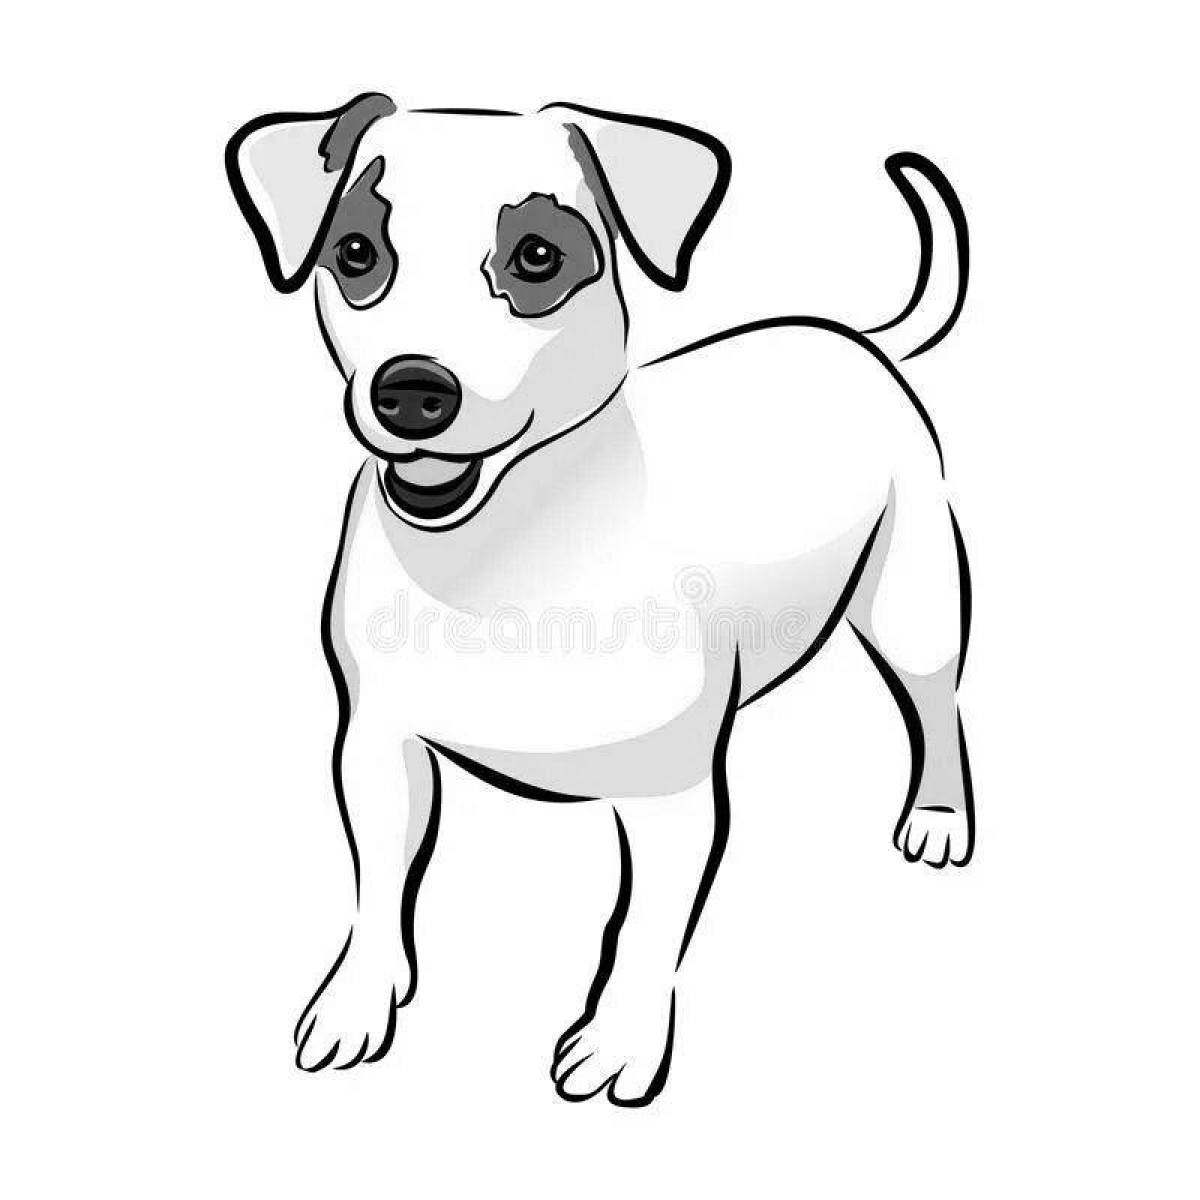 Jack russell terrier #1